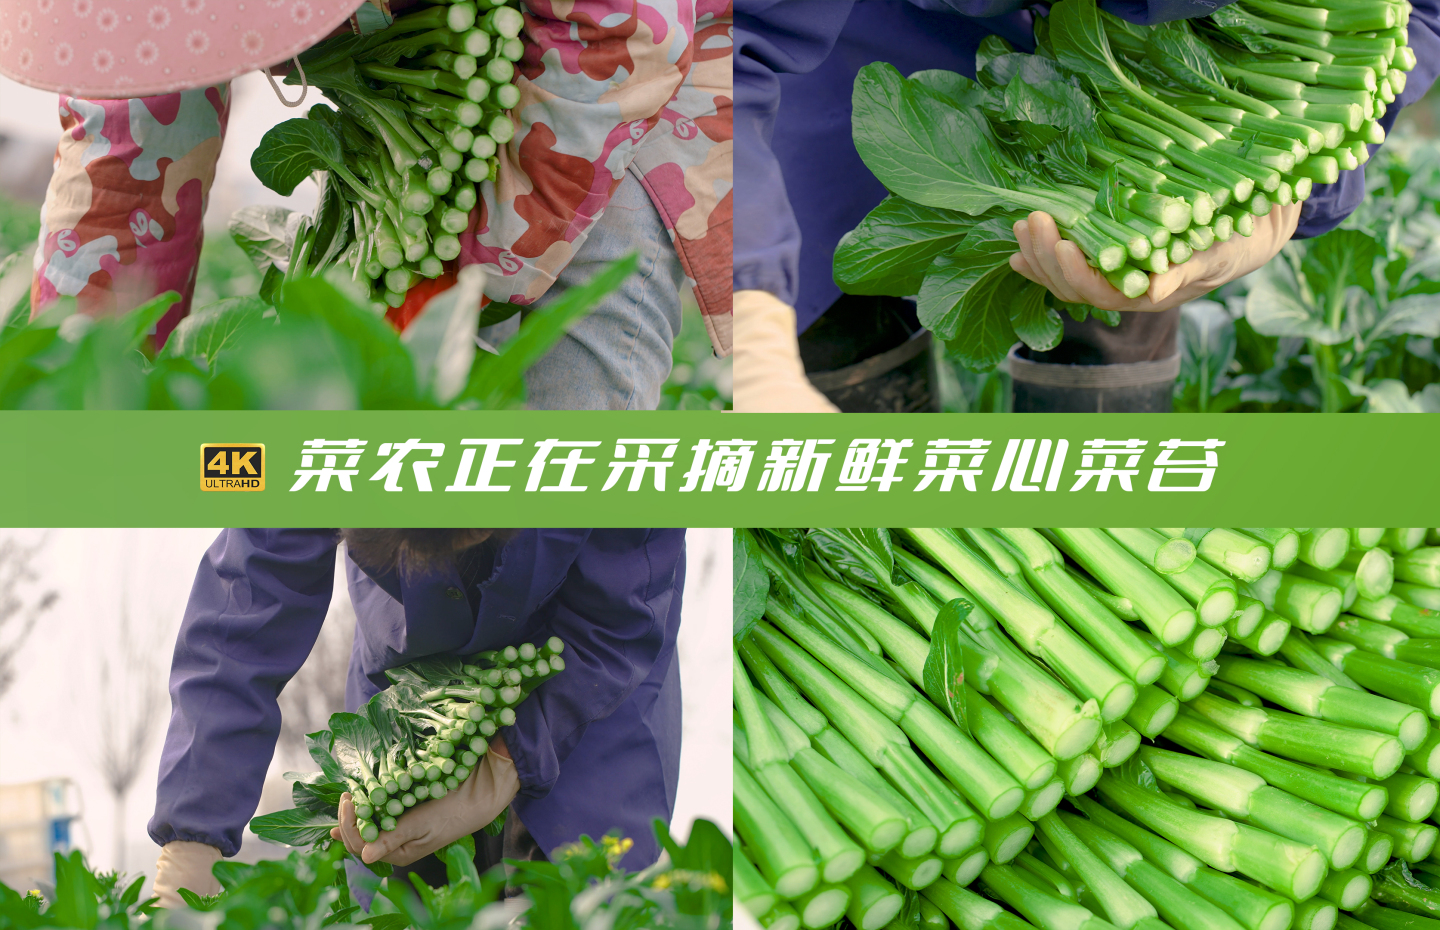 4k农民在菜地菜畦里采摘有机蔬菜菜心菜苔